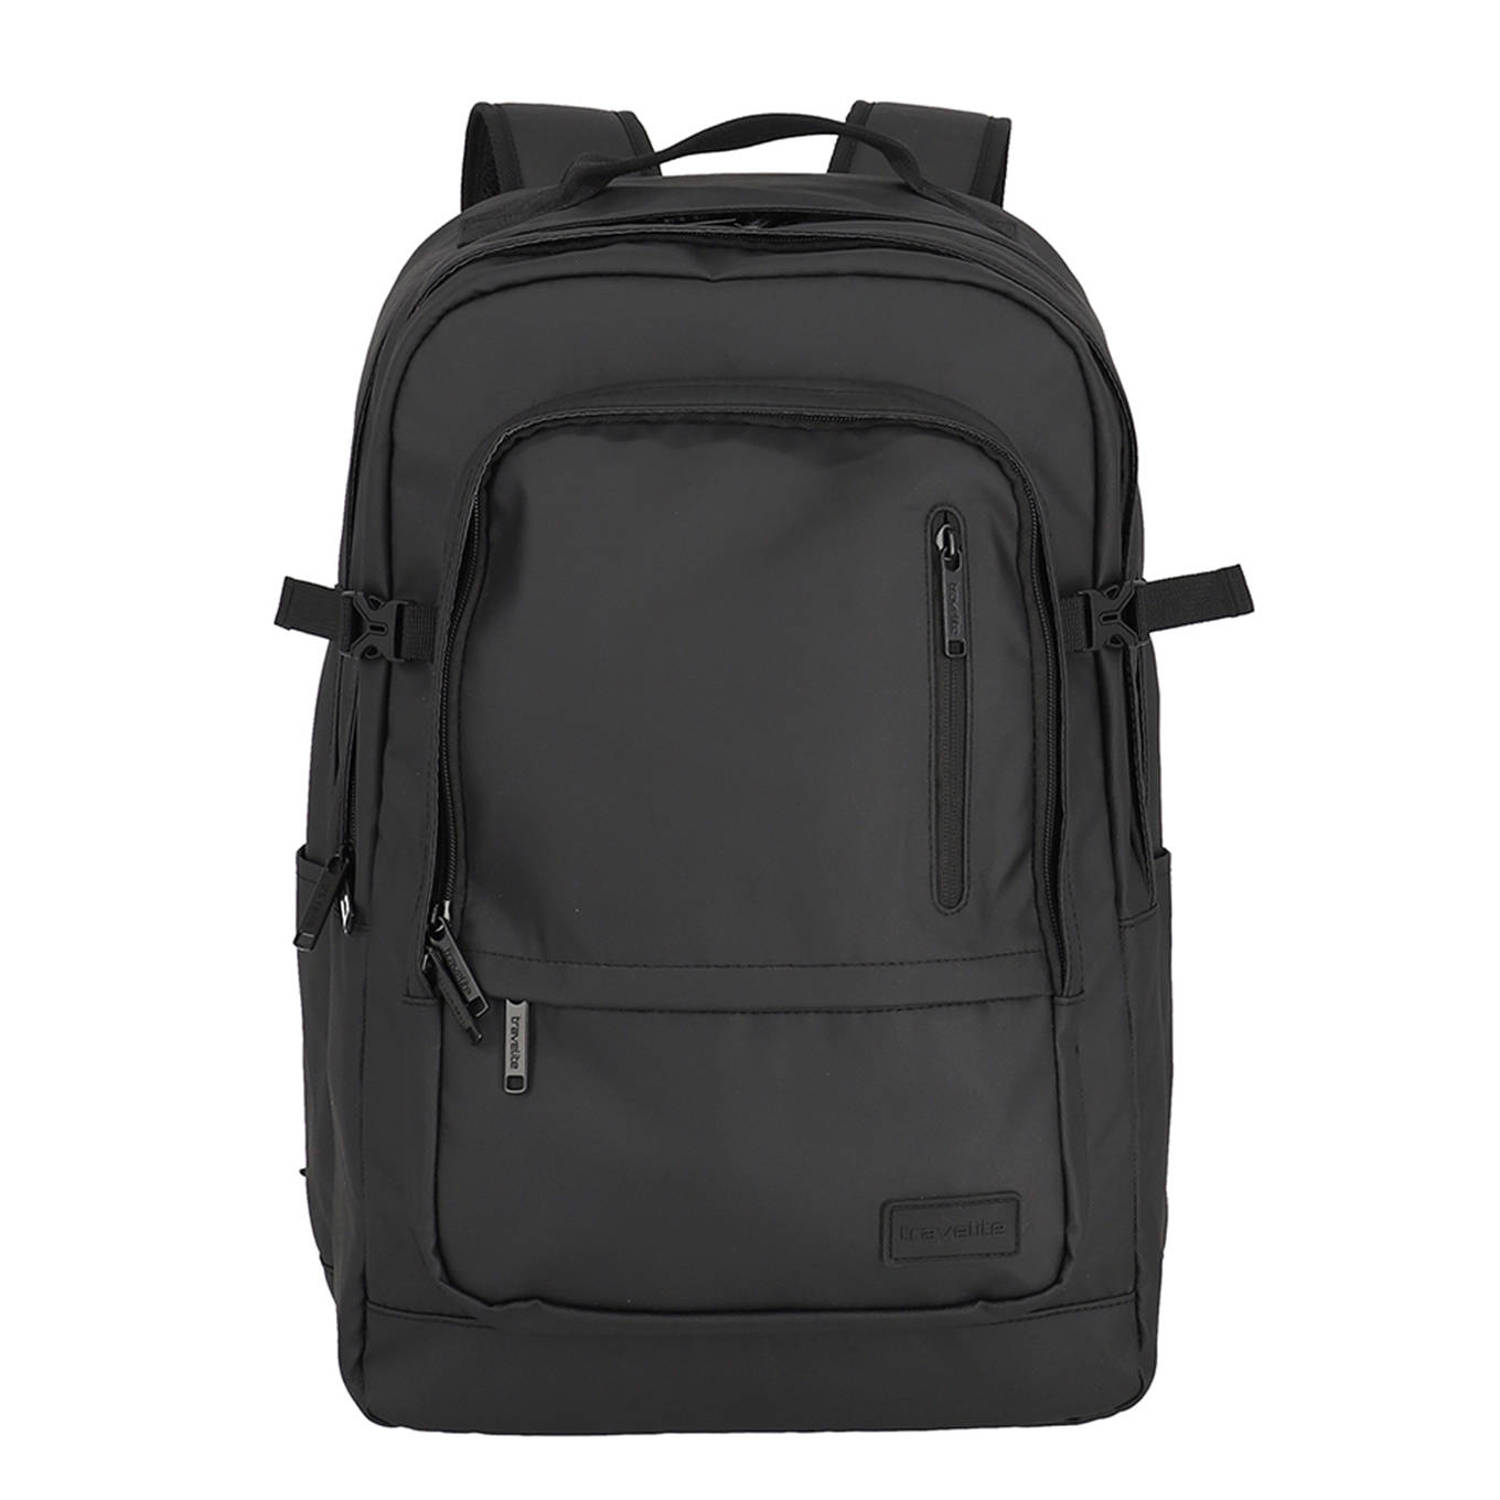 Travelite rugzak Basics Backpack zwart